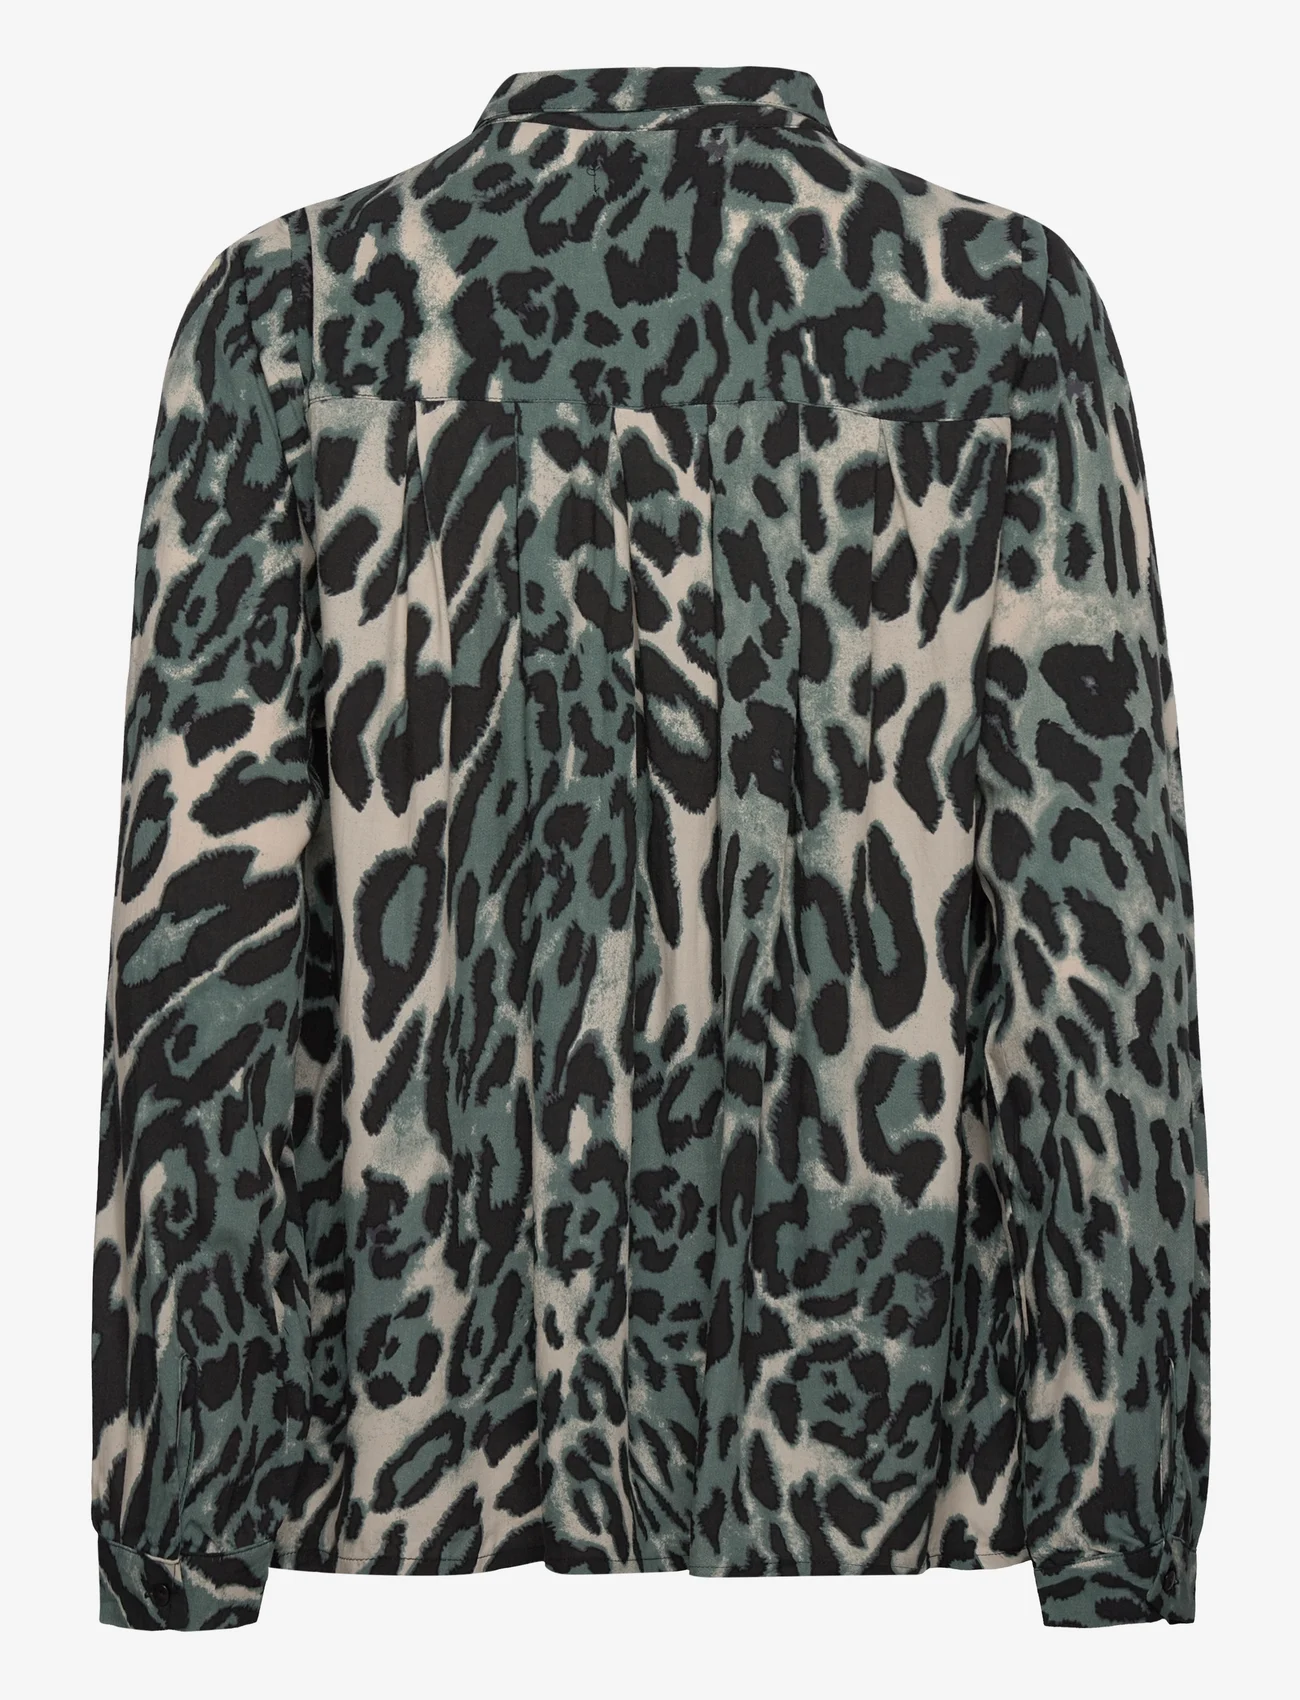 Lollys Laundry - Lari Shirt - long-sleeved shirts - 72 leopard print - 1